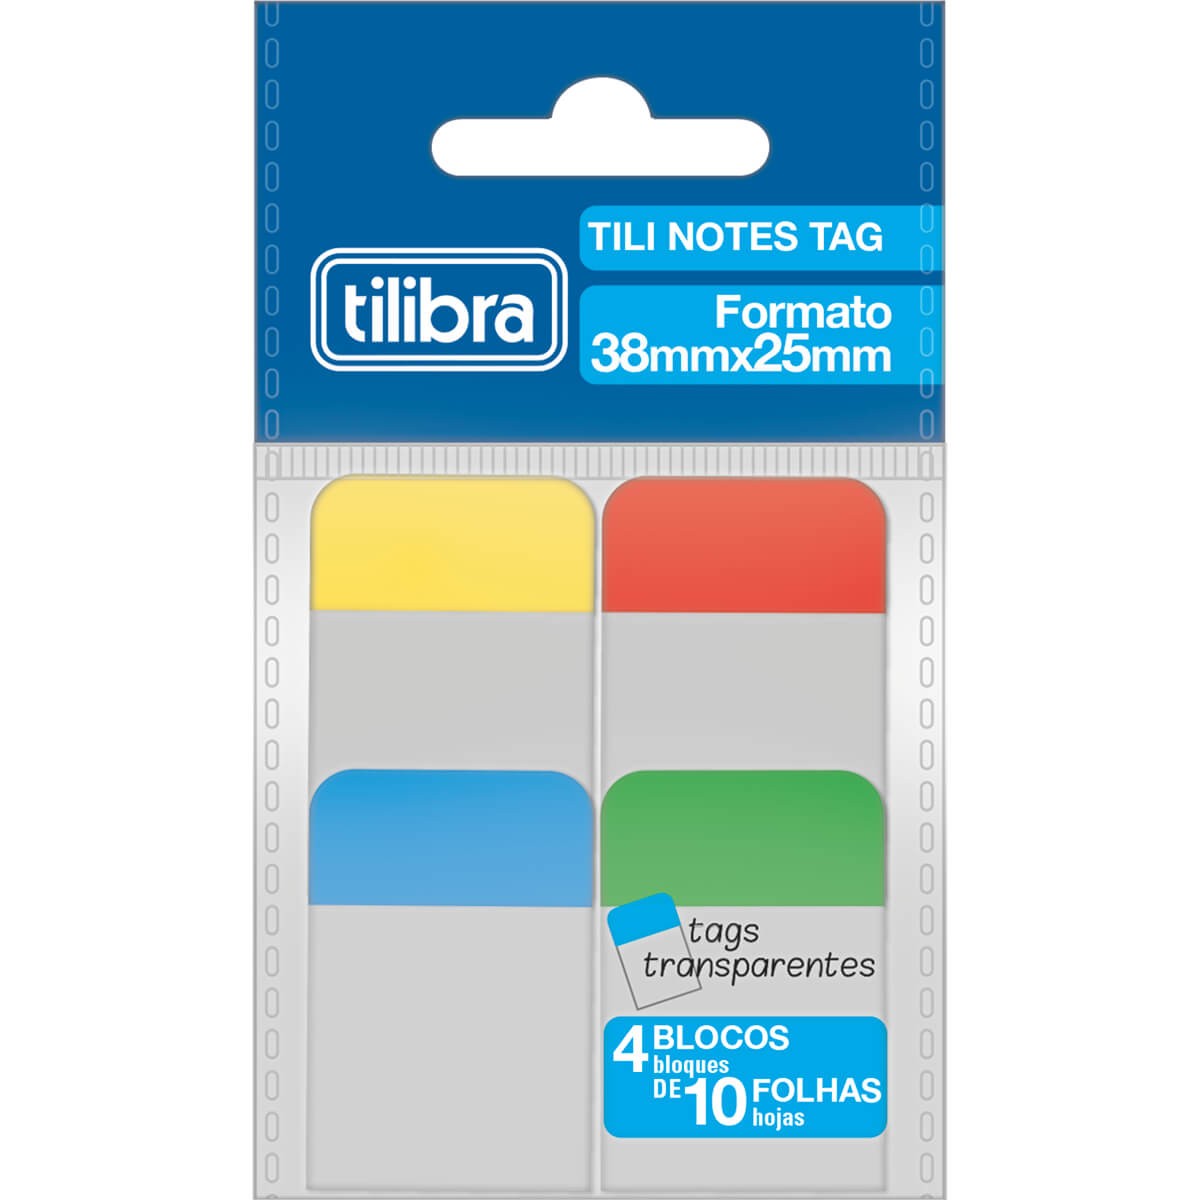 Flags - Tilibra - Tili Notes Tags Transparentes 38mm x 25mm